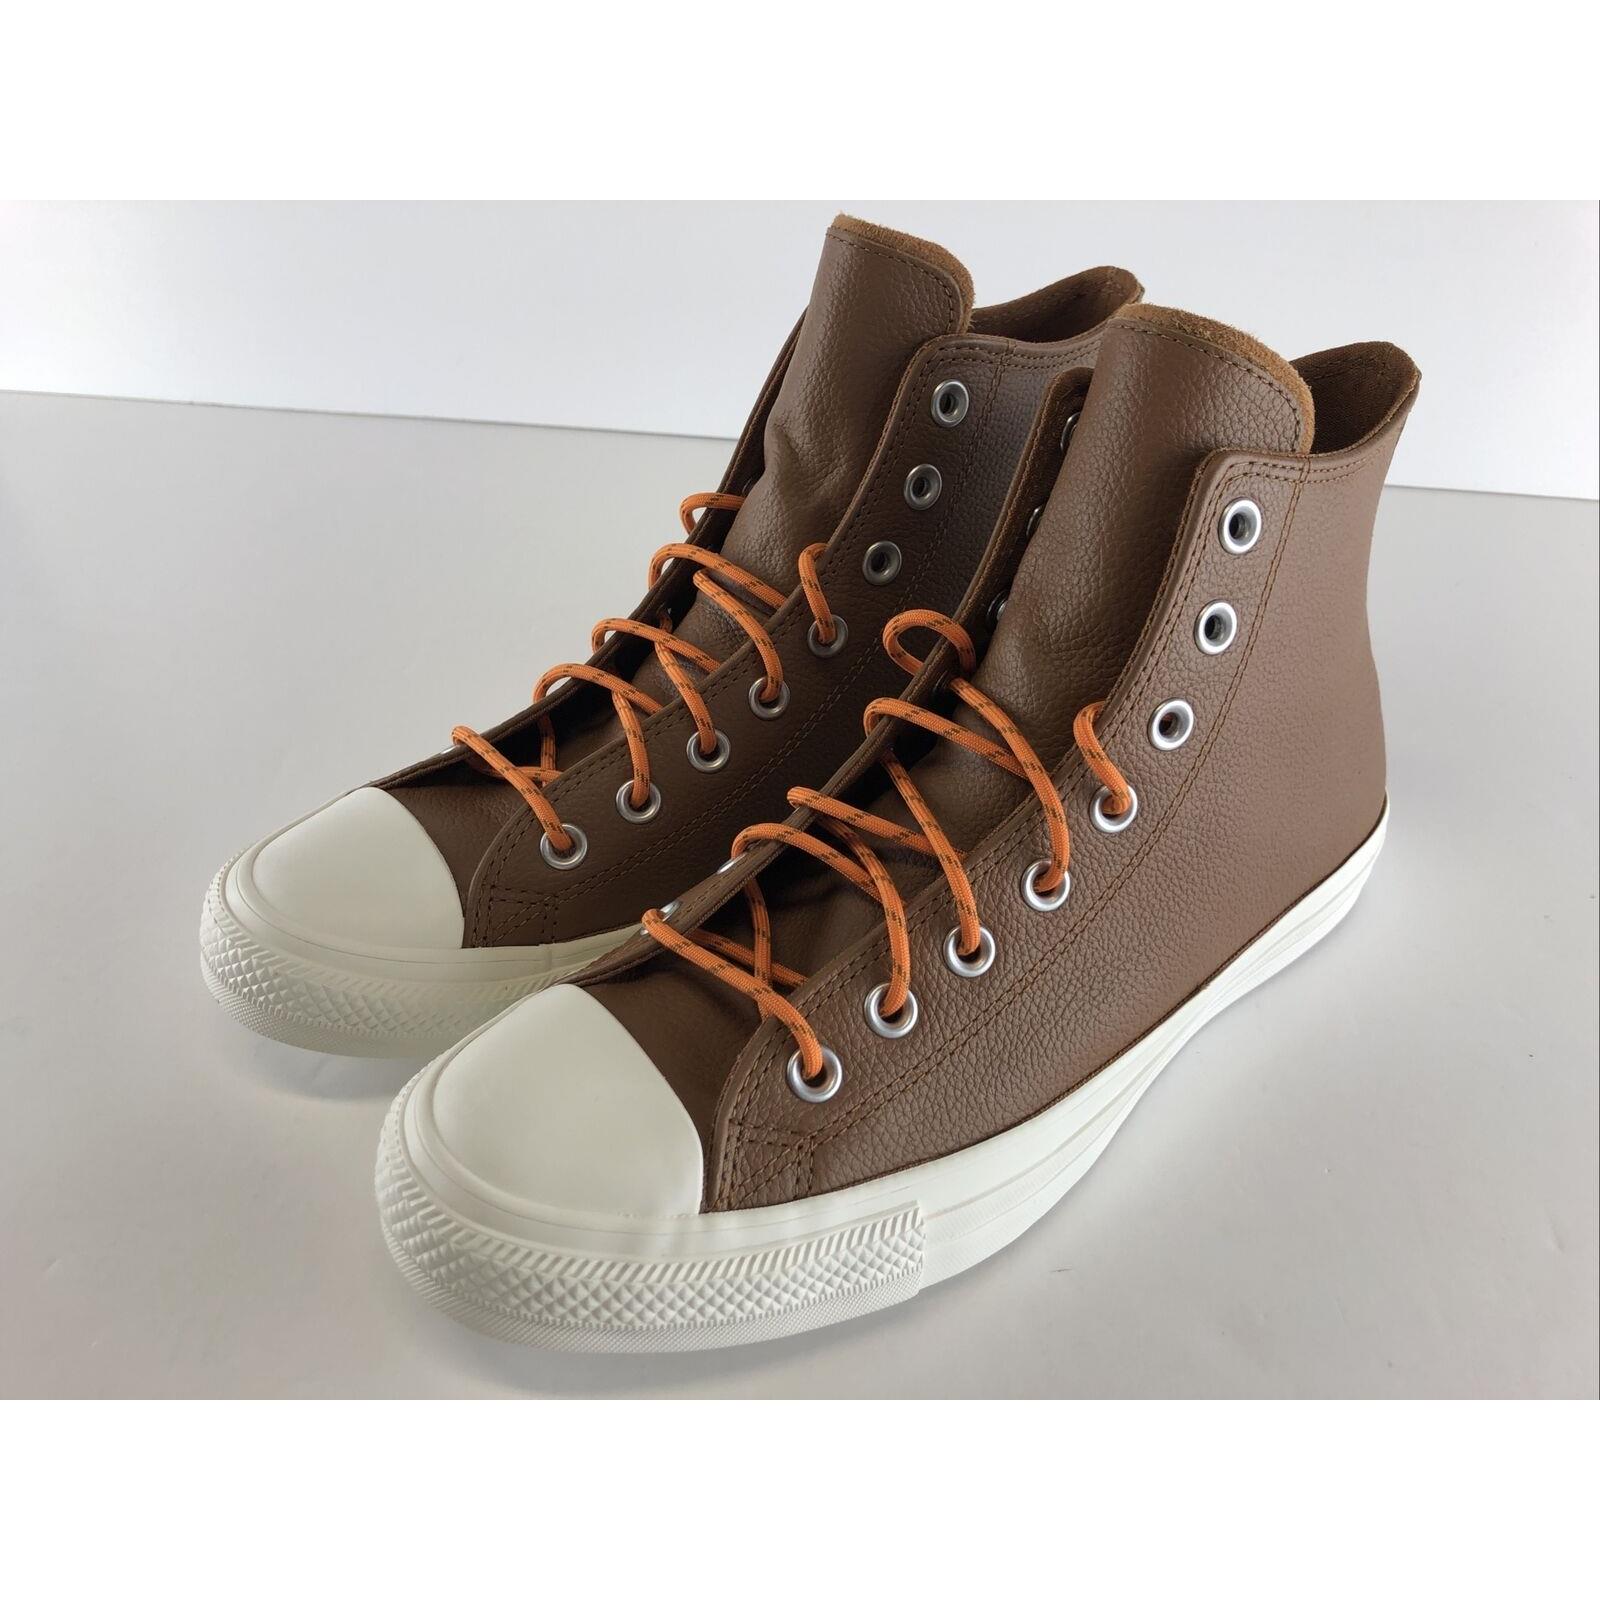 Converse Chuck Taylor All Star HI Warm Tan Brown Orange Rind Egret Shoes Men 8.5